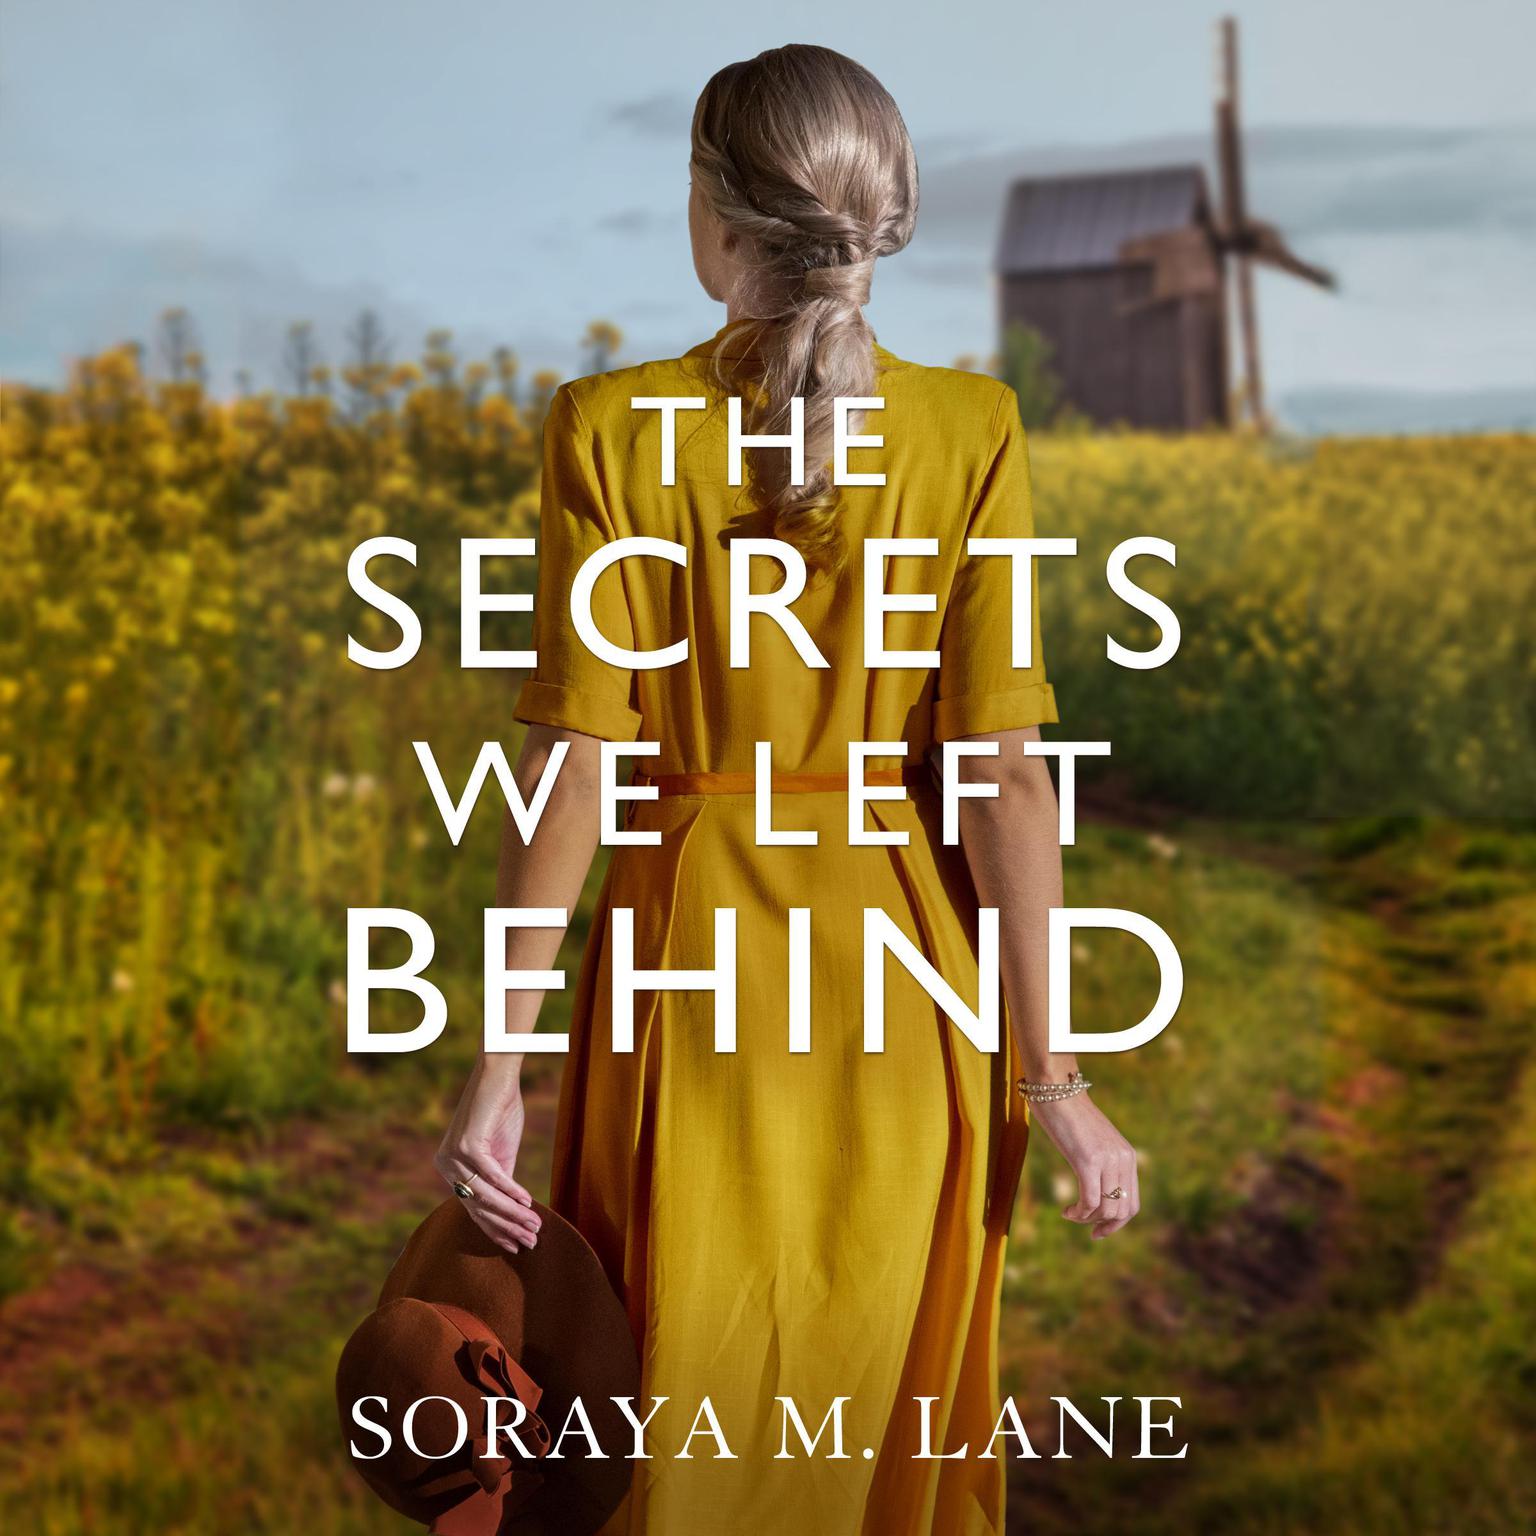 The Secrets We Left Behind Audiobook By Soraya Lane — Download Now